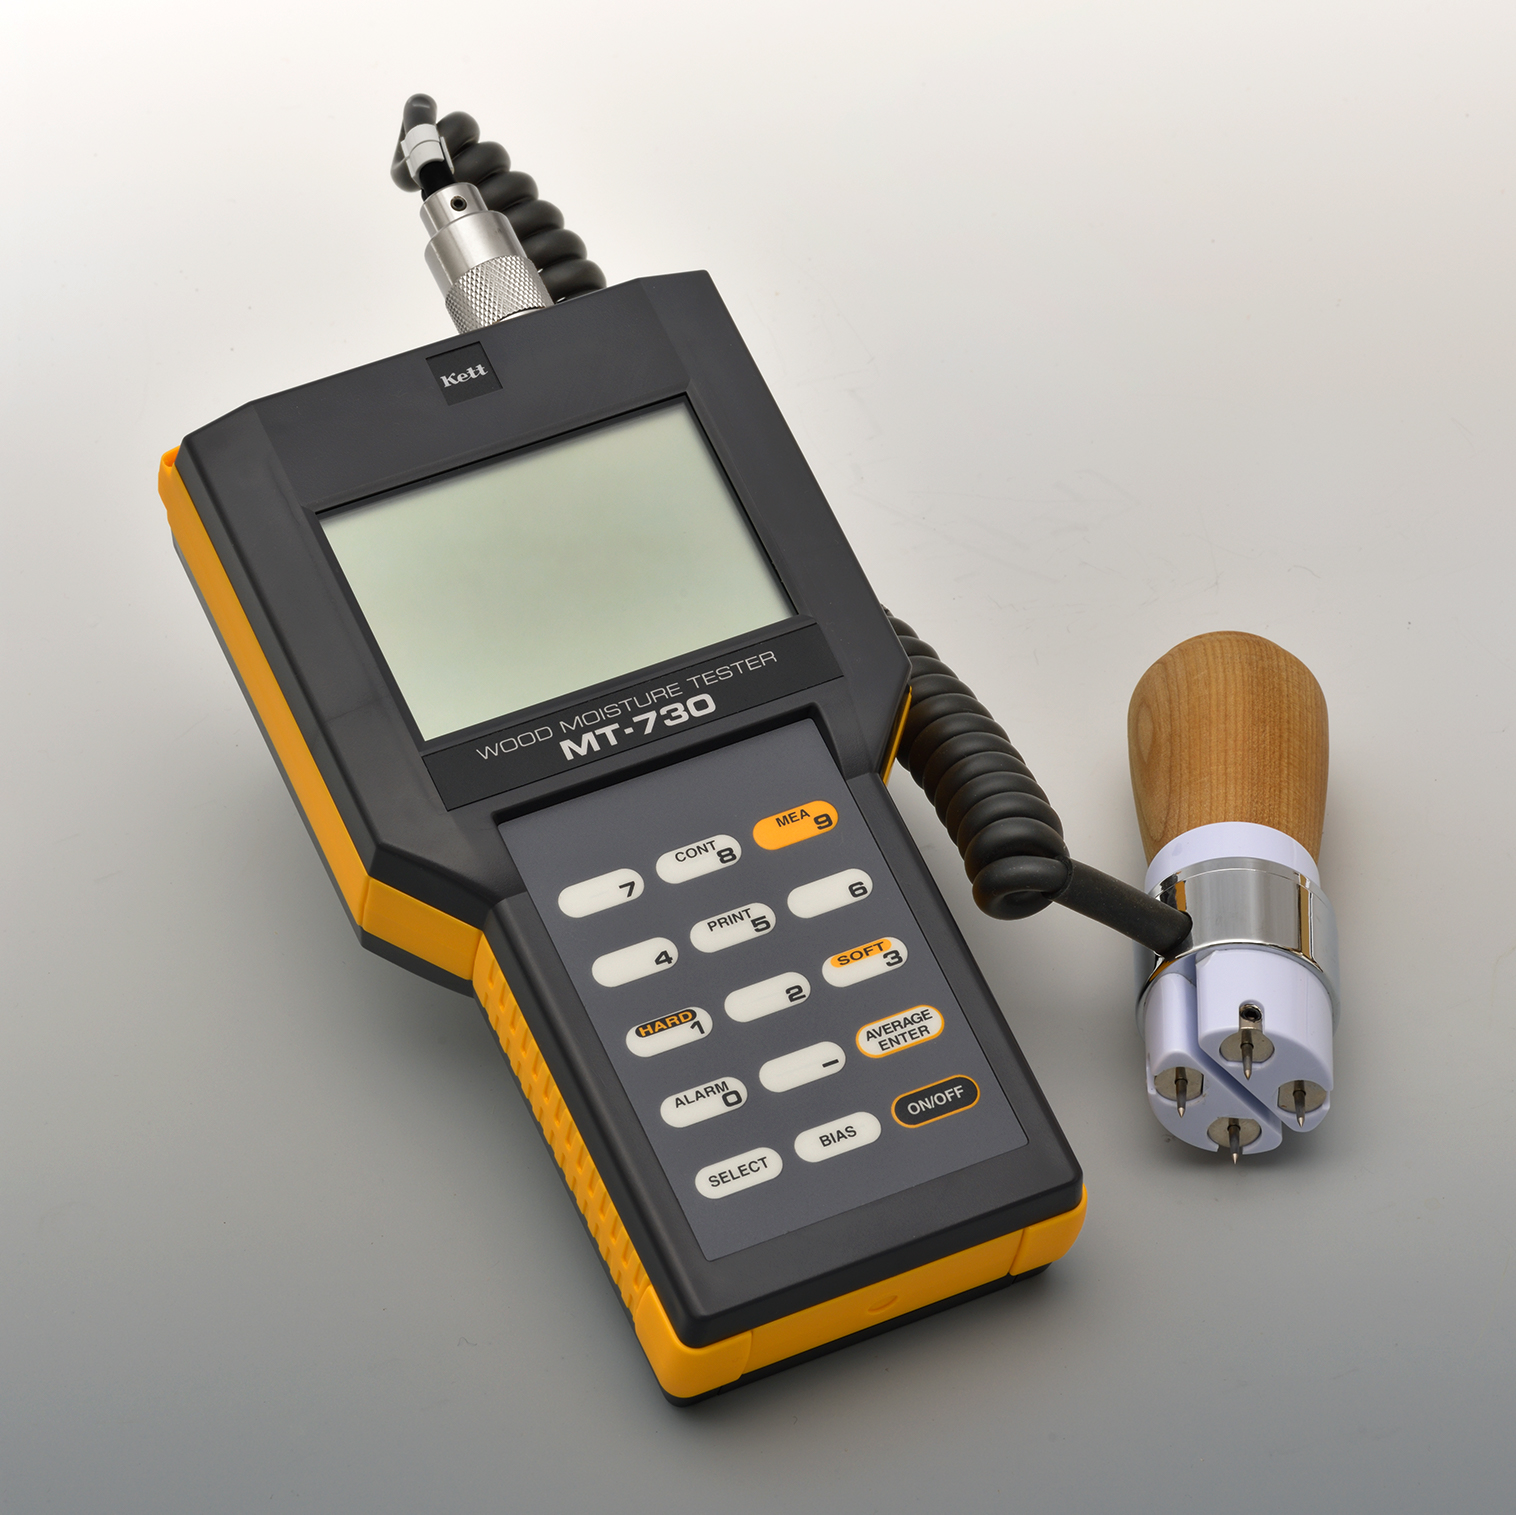 KX-TGM 420 Wシリーズコードレス電話システム対応パナソニックコードレス電話端末アクセサリ-KX-TGMA 44 W (ホワイト) - 2